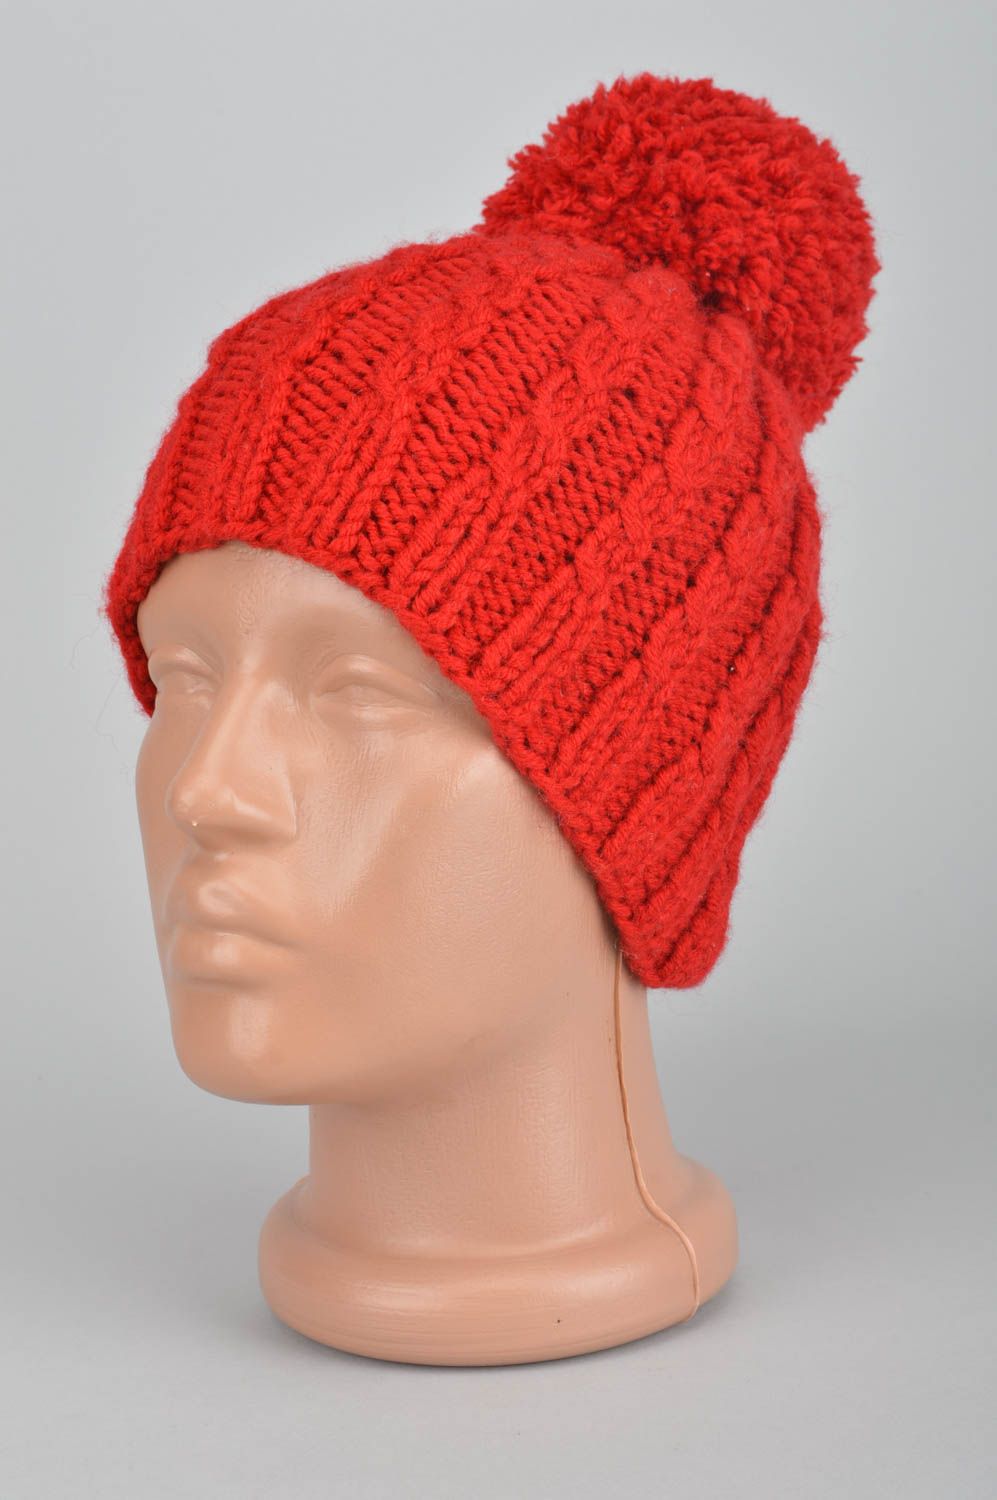 Handmade knitted cap winter cap for kids unusual children headwear cute cap photo 1